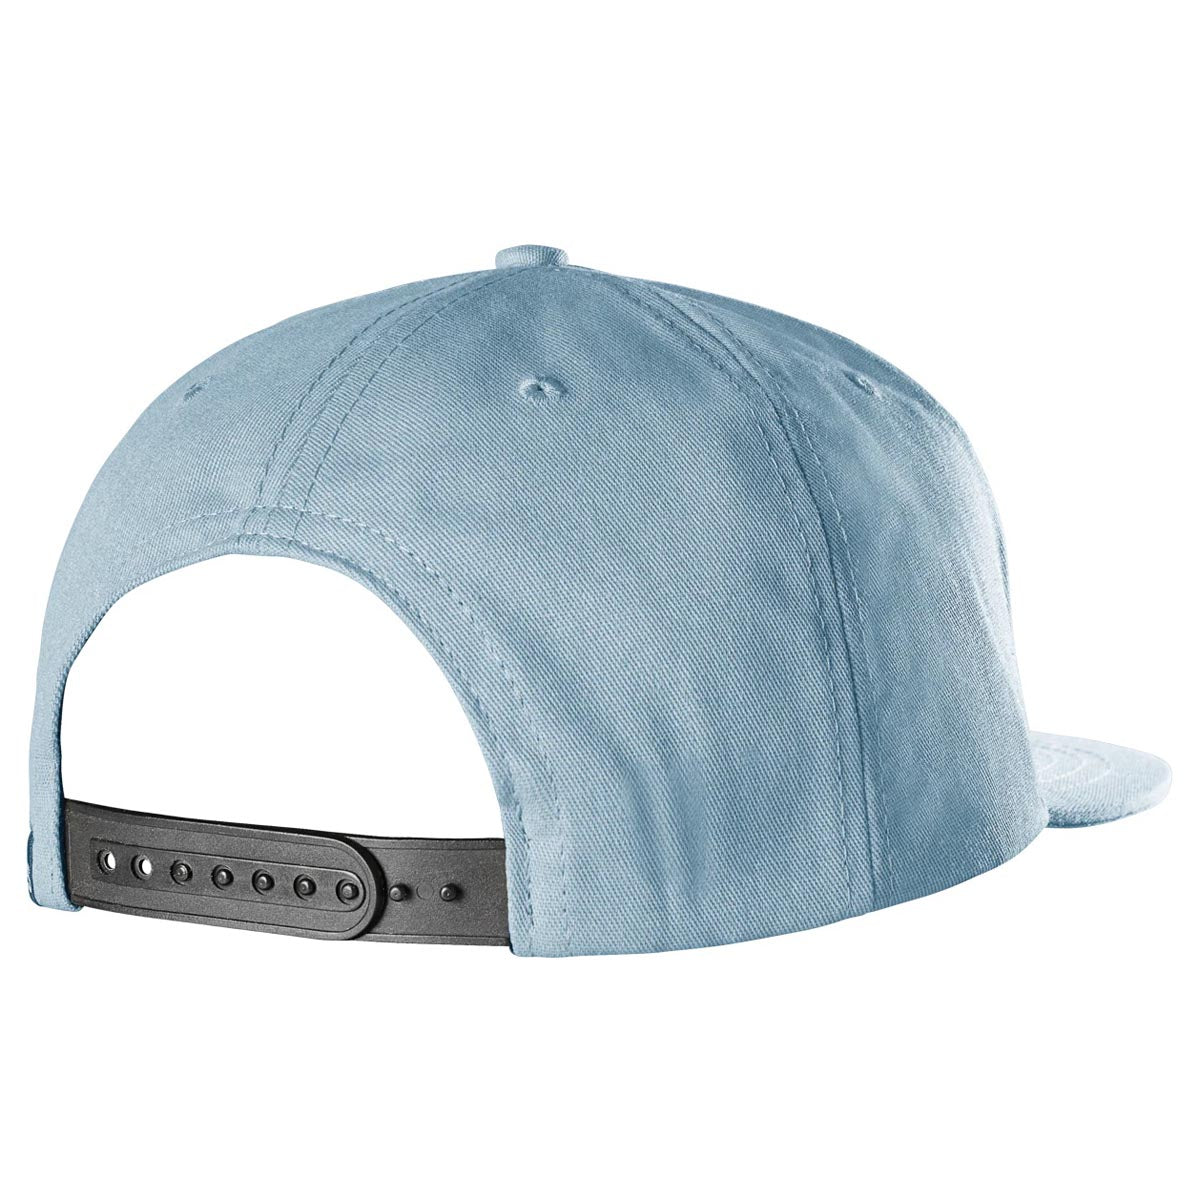 Etnies Corp Snapback Hat - Light Blue image 2